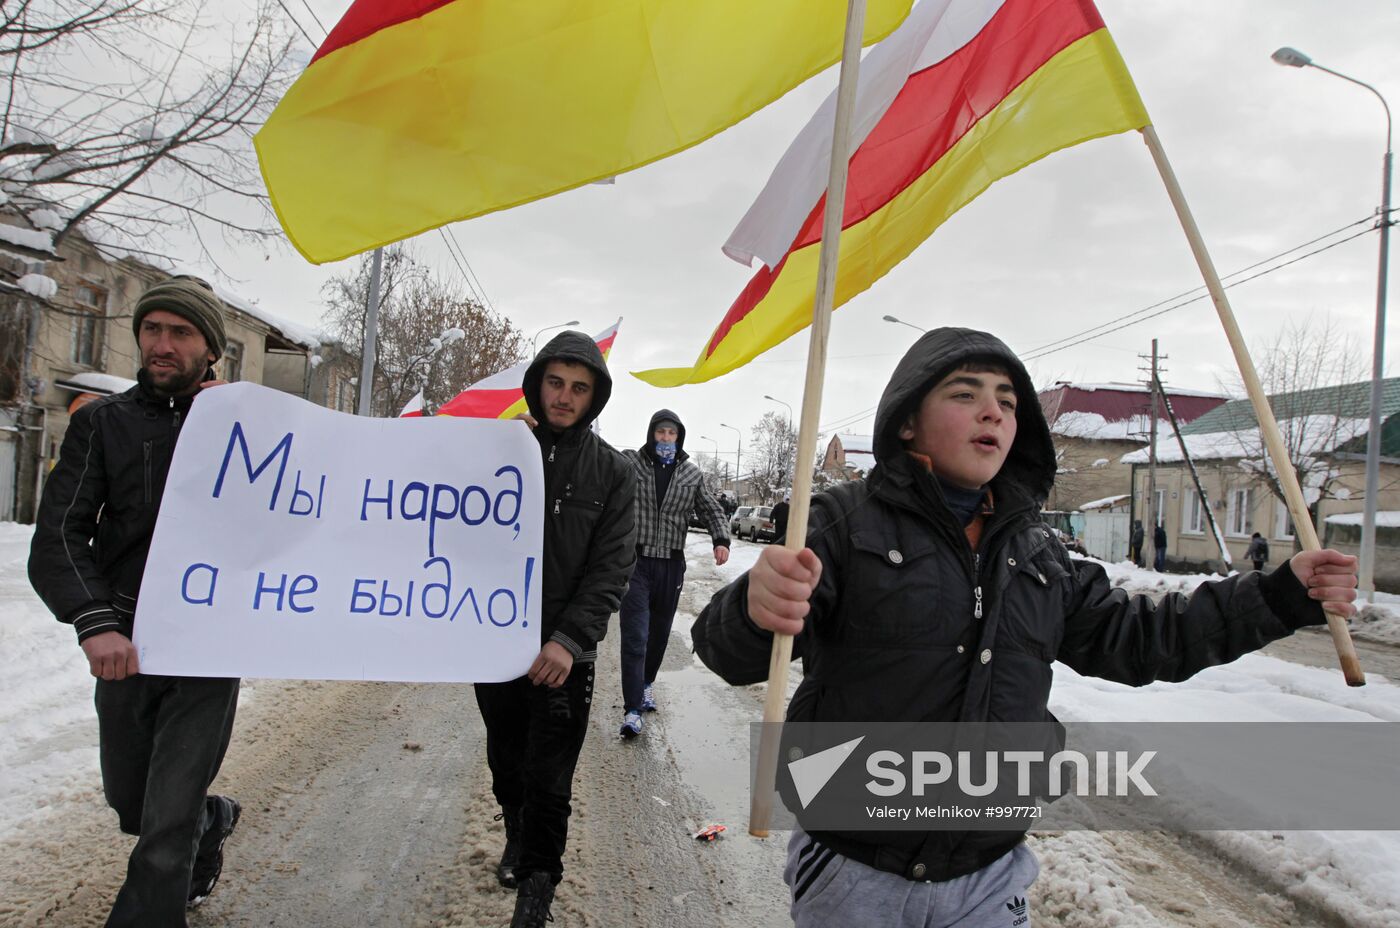 Alla Dzhioyeva supporters rally at Tskhinval's central square